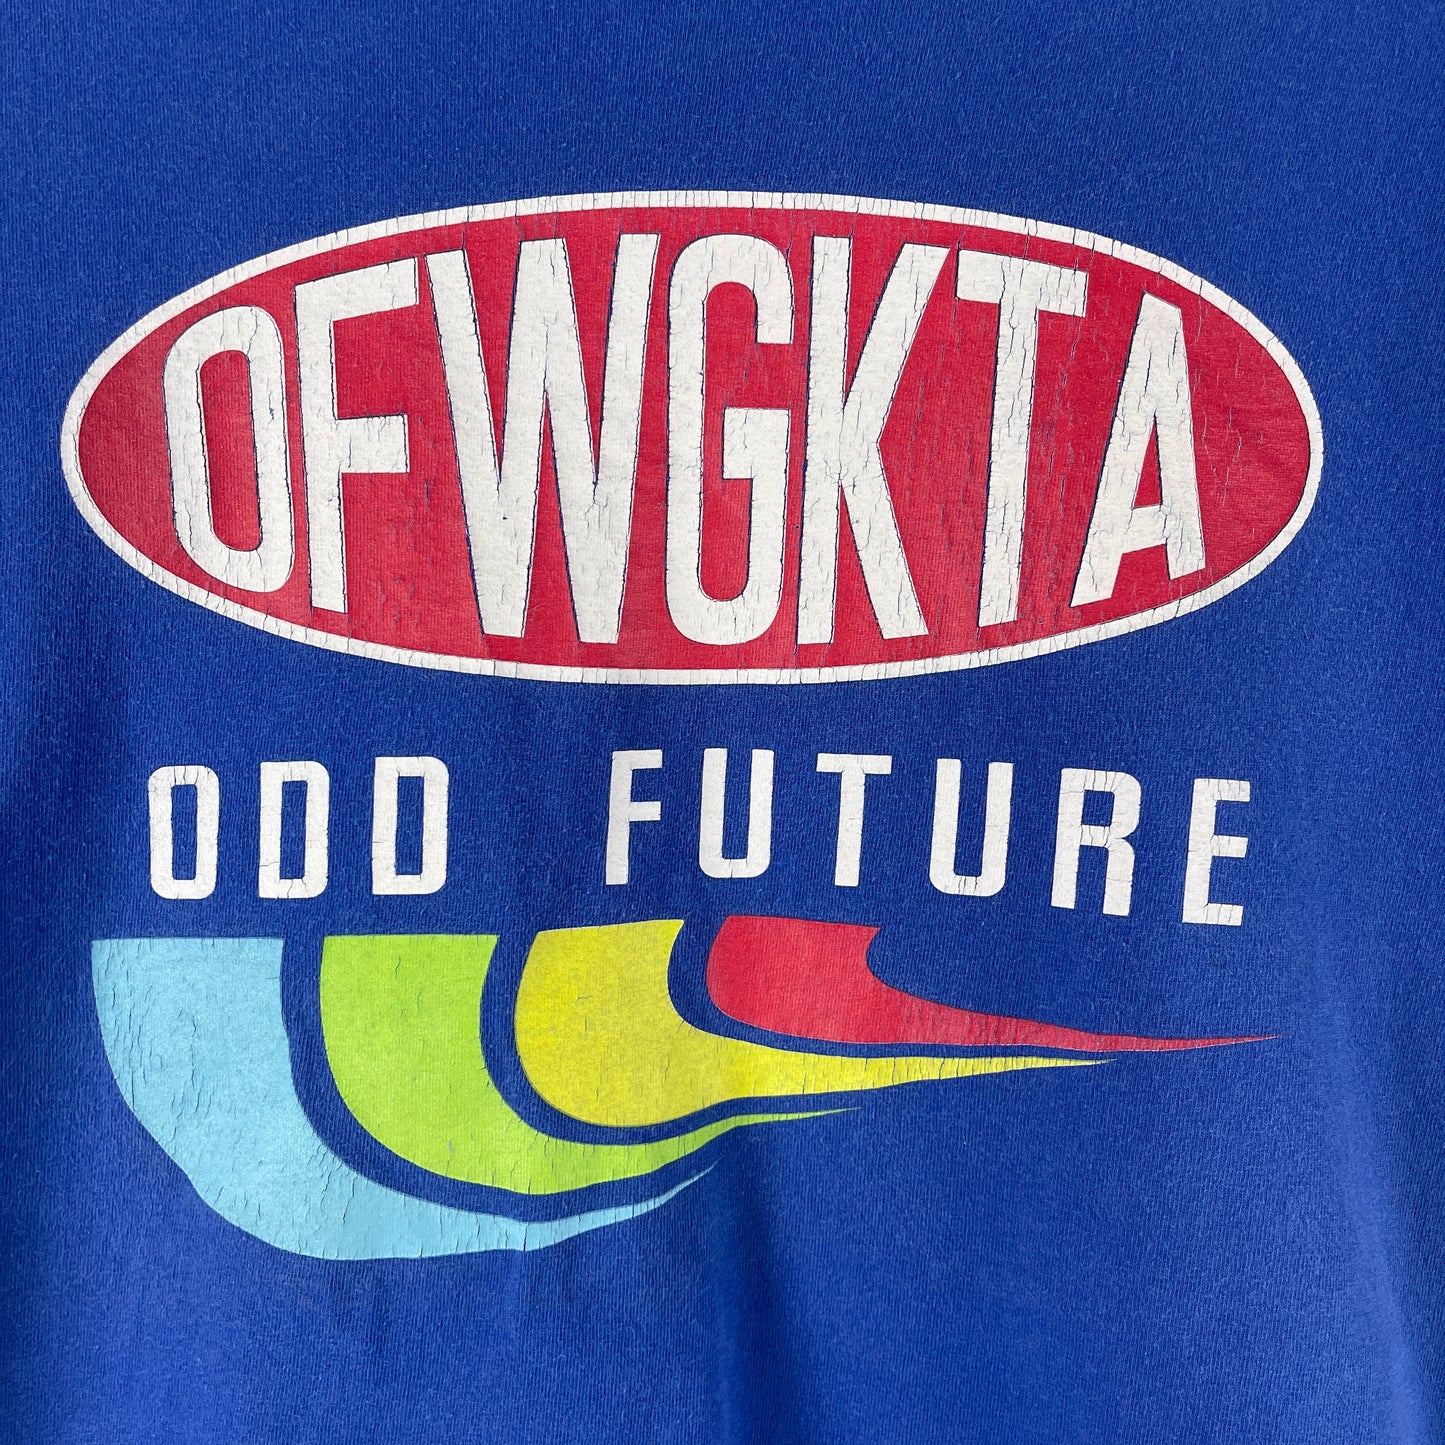 OFWGKTA Odd Future "Dupont Racing" Golf Wang T-shirt